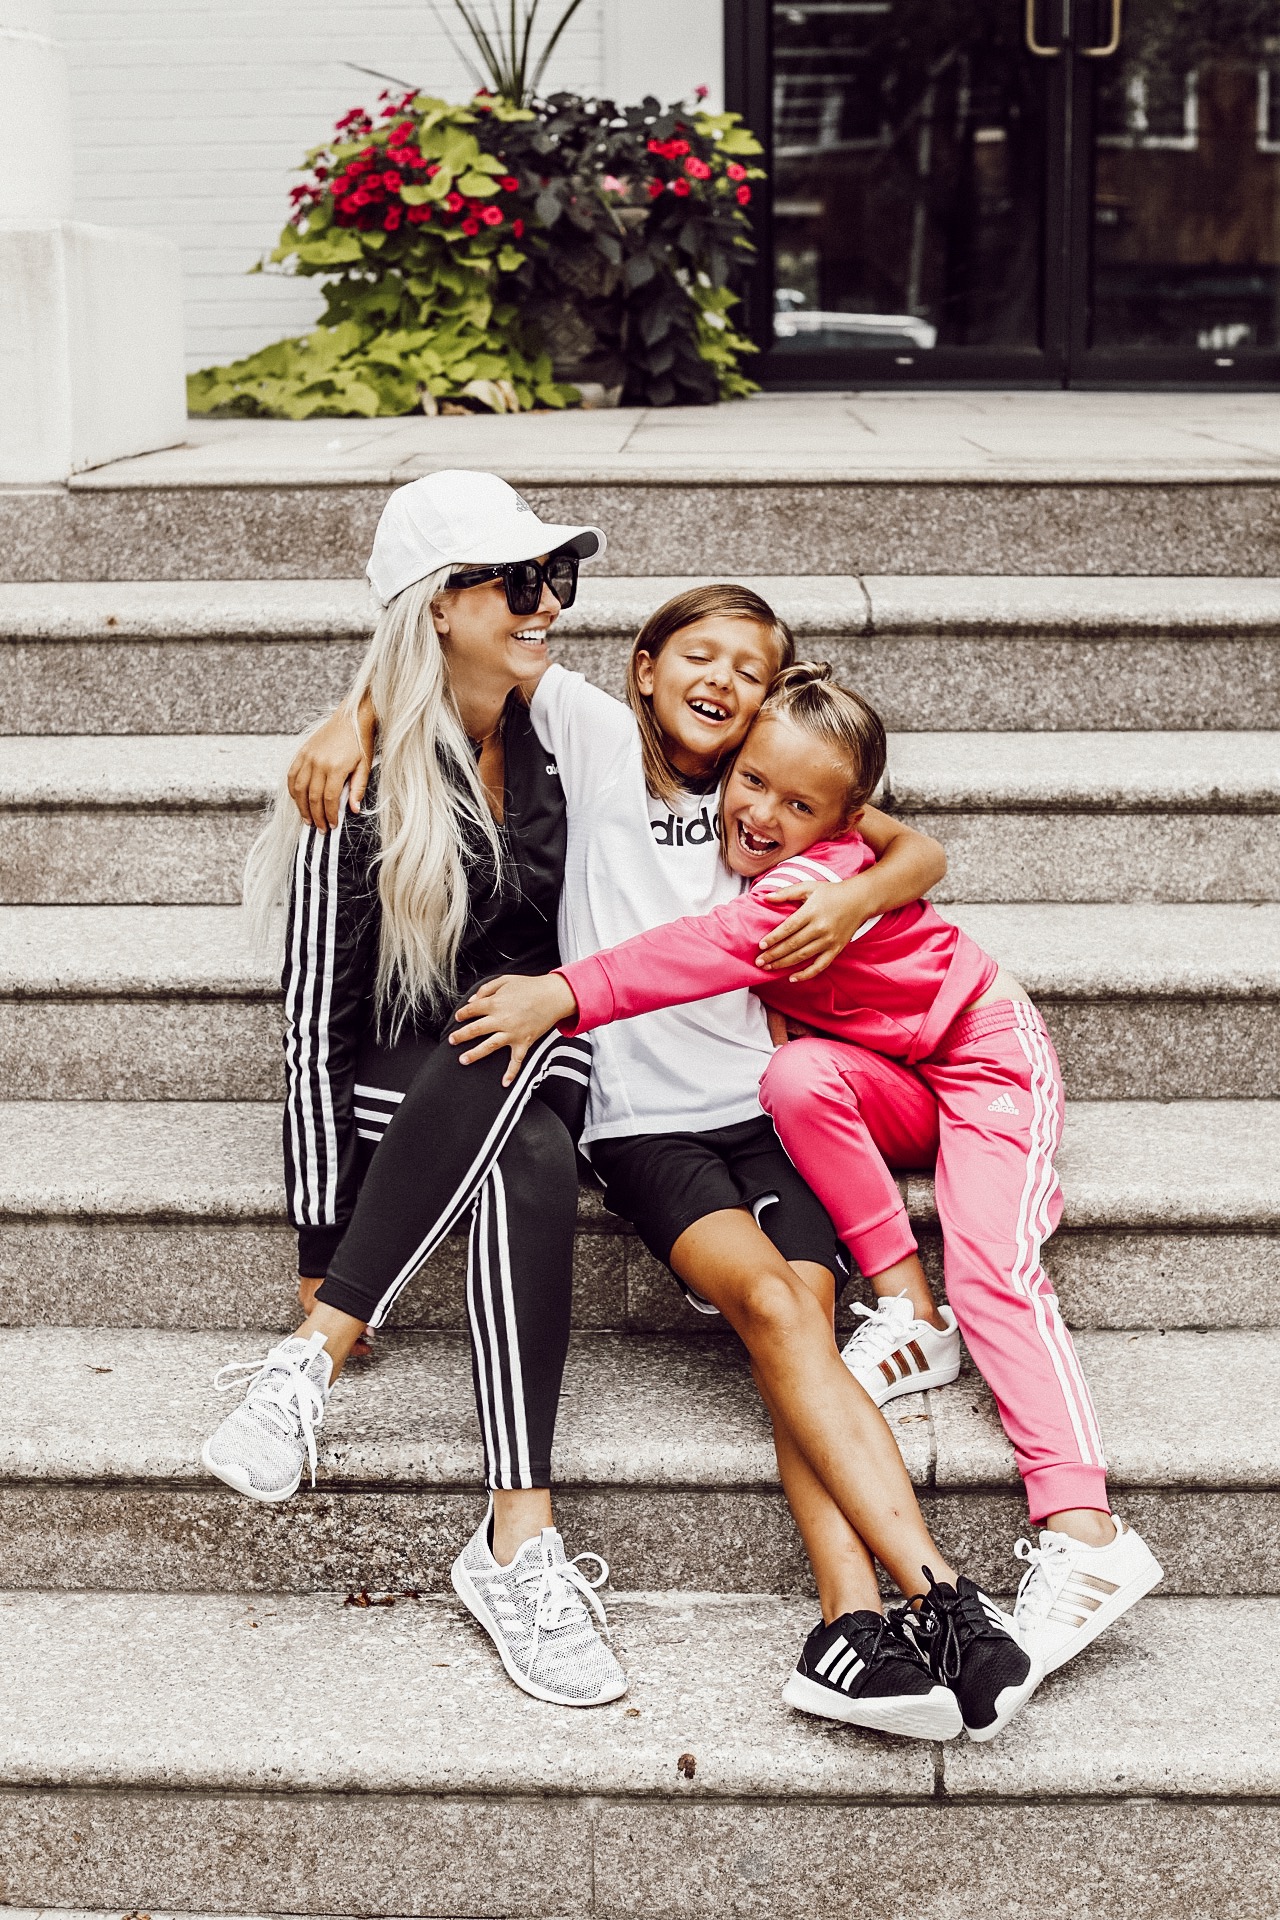 adidas family sale 2019